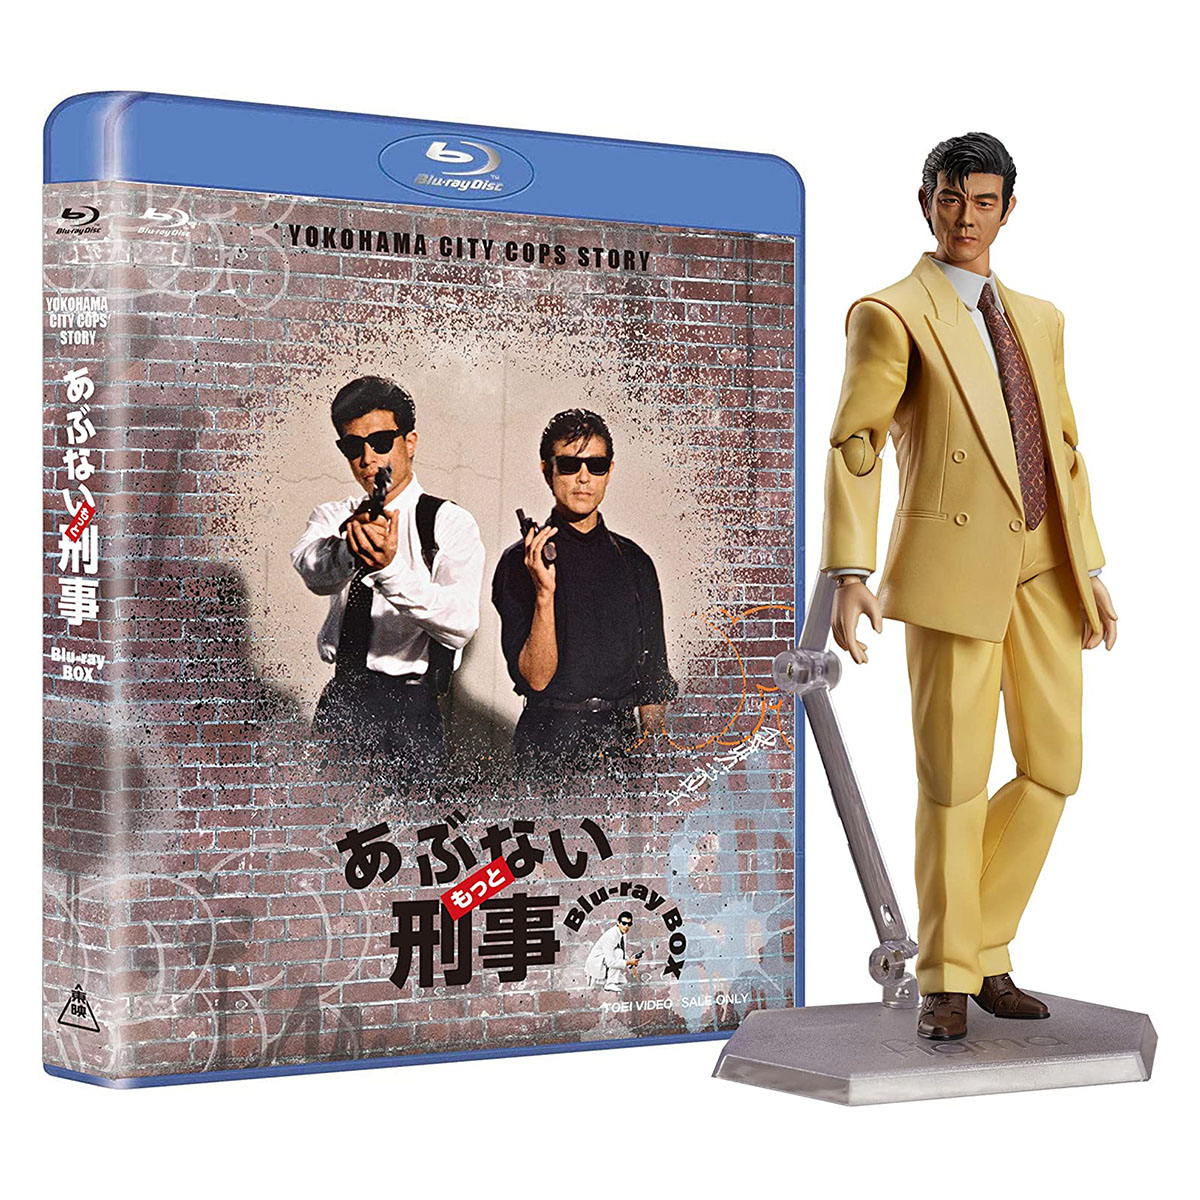 【DB】あぶない刑事 Blu-ray BOX VOL，1『タカフィギュア付き』完全予約限定生産-019